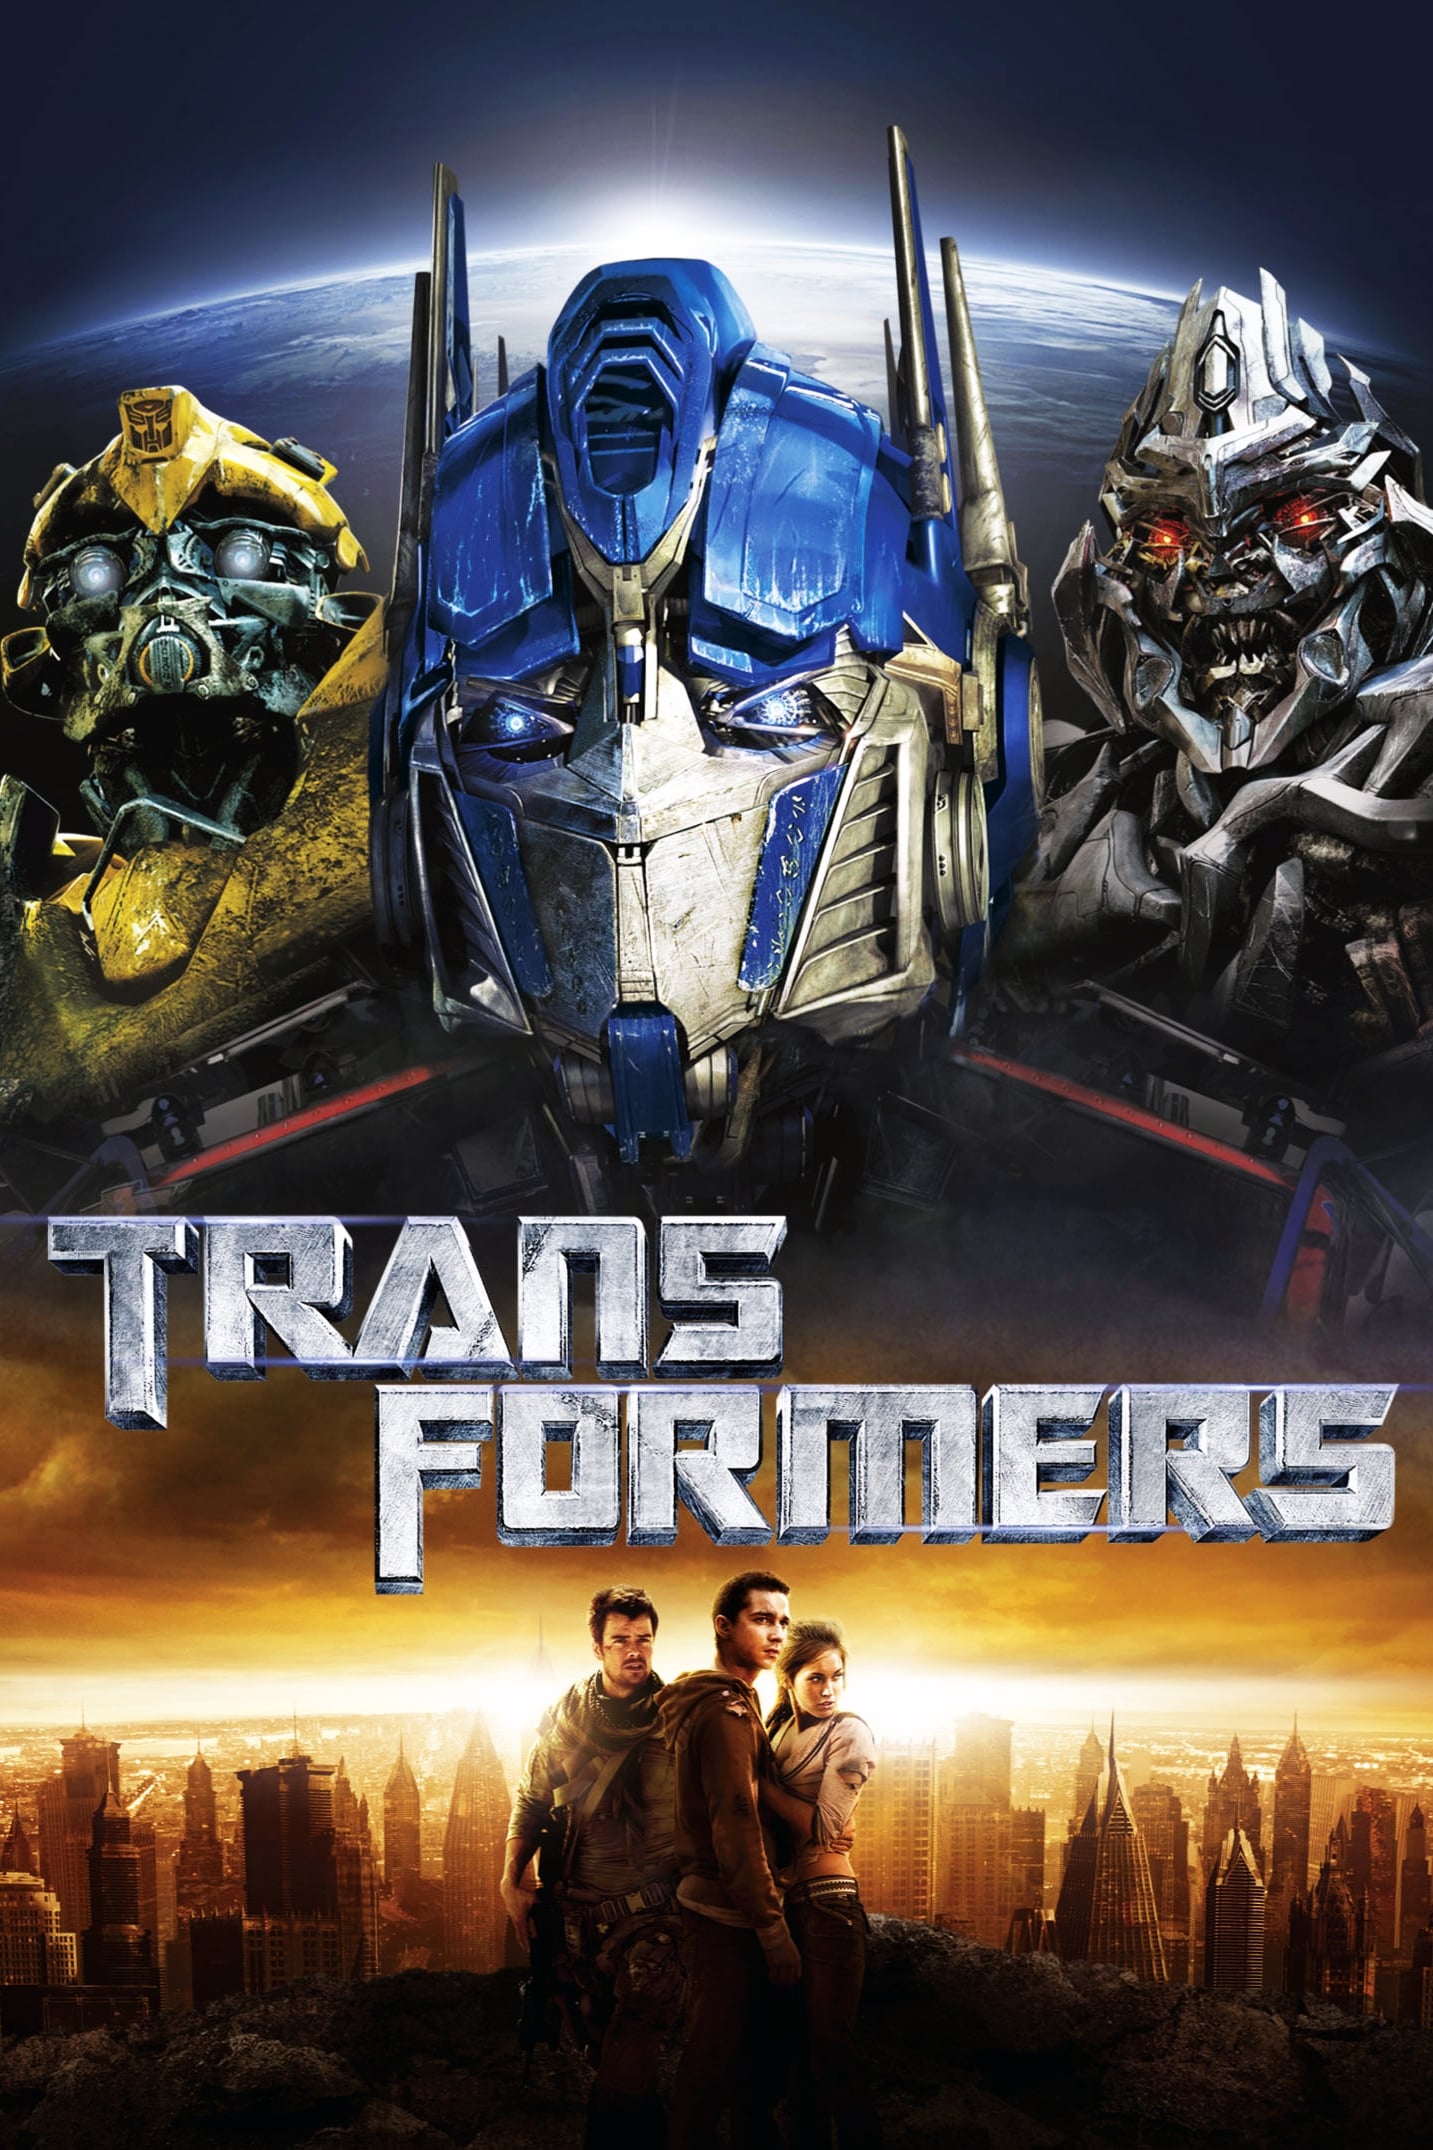 Transformers 1